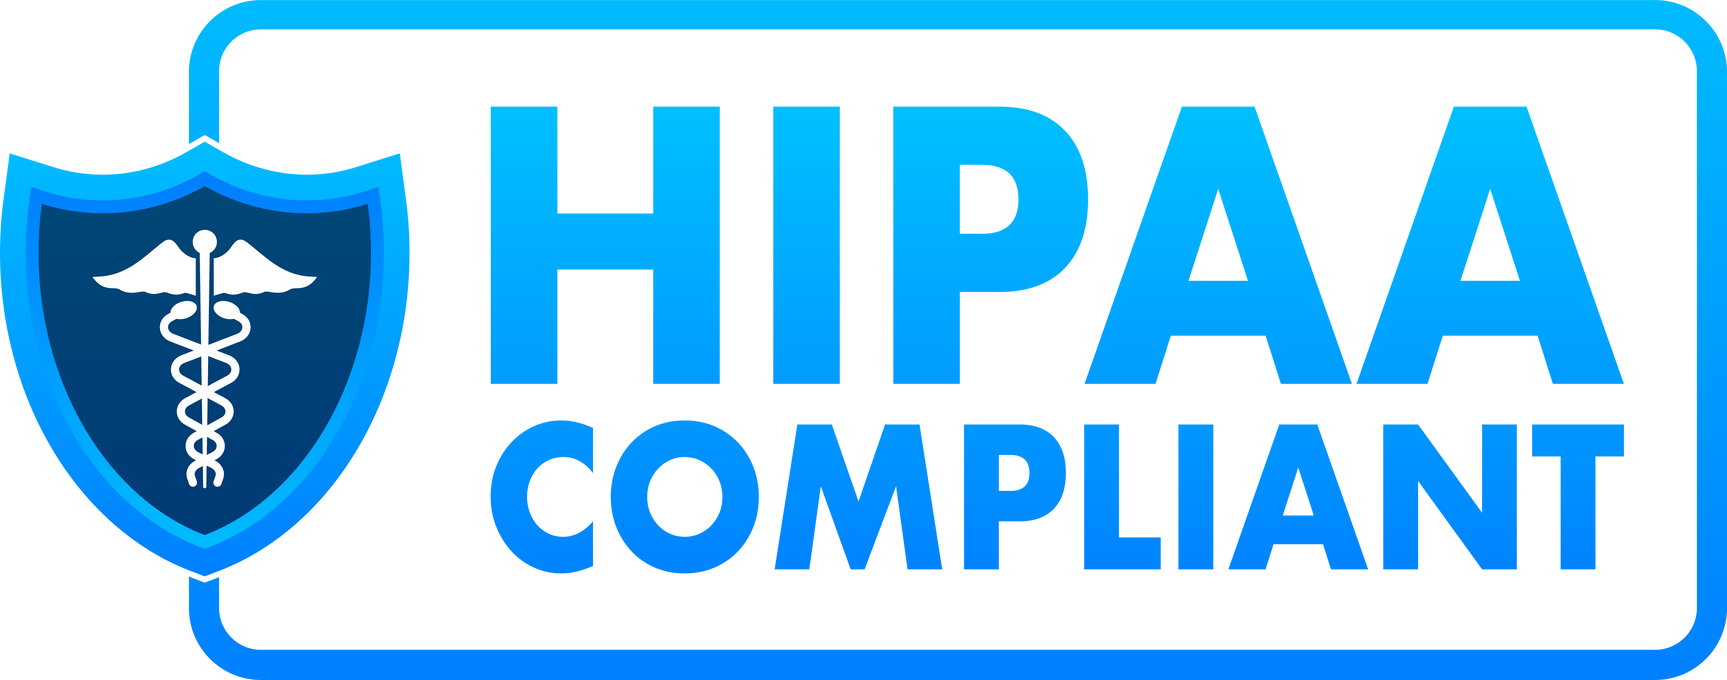 Hipaa compliant. Checkmark icon. Vector design. Logo symbol. Vector stock illustration